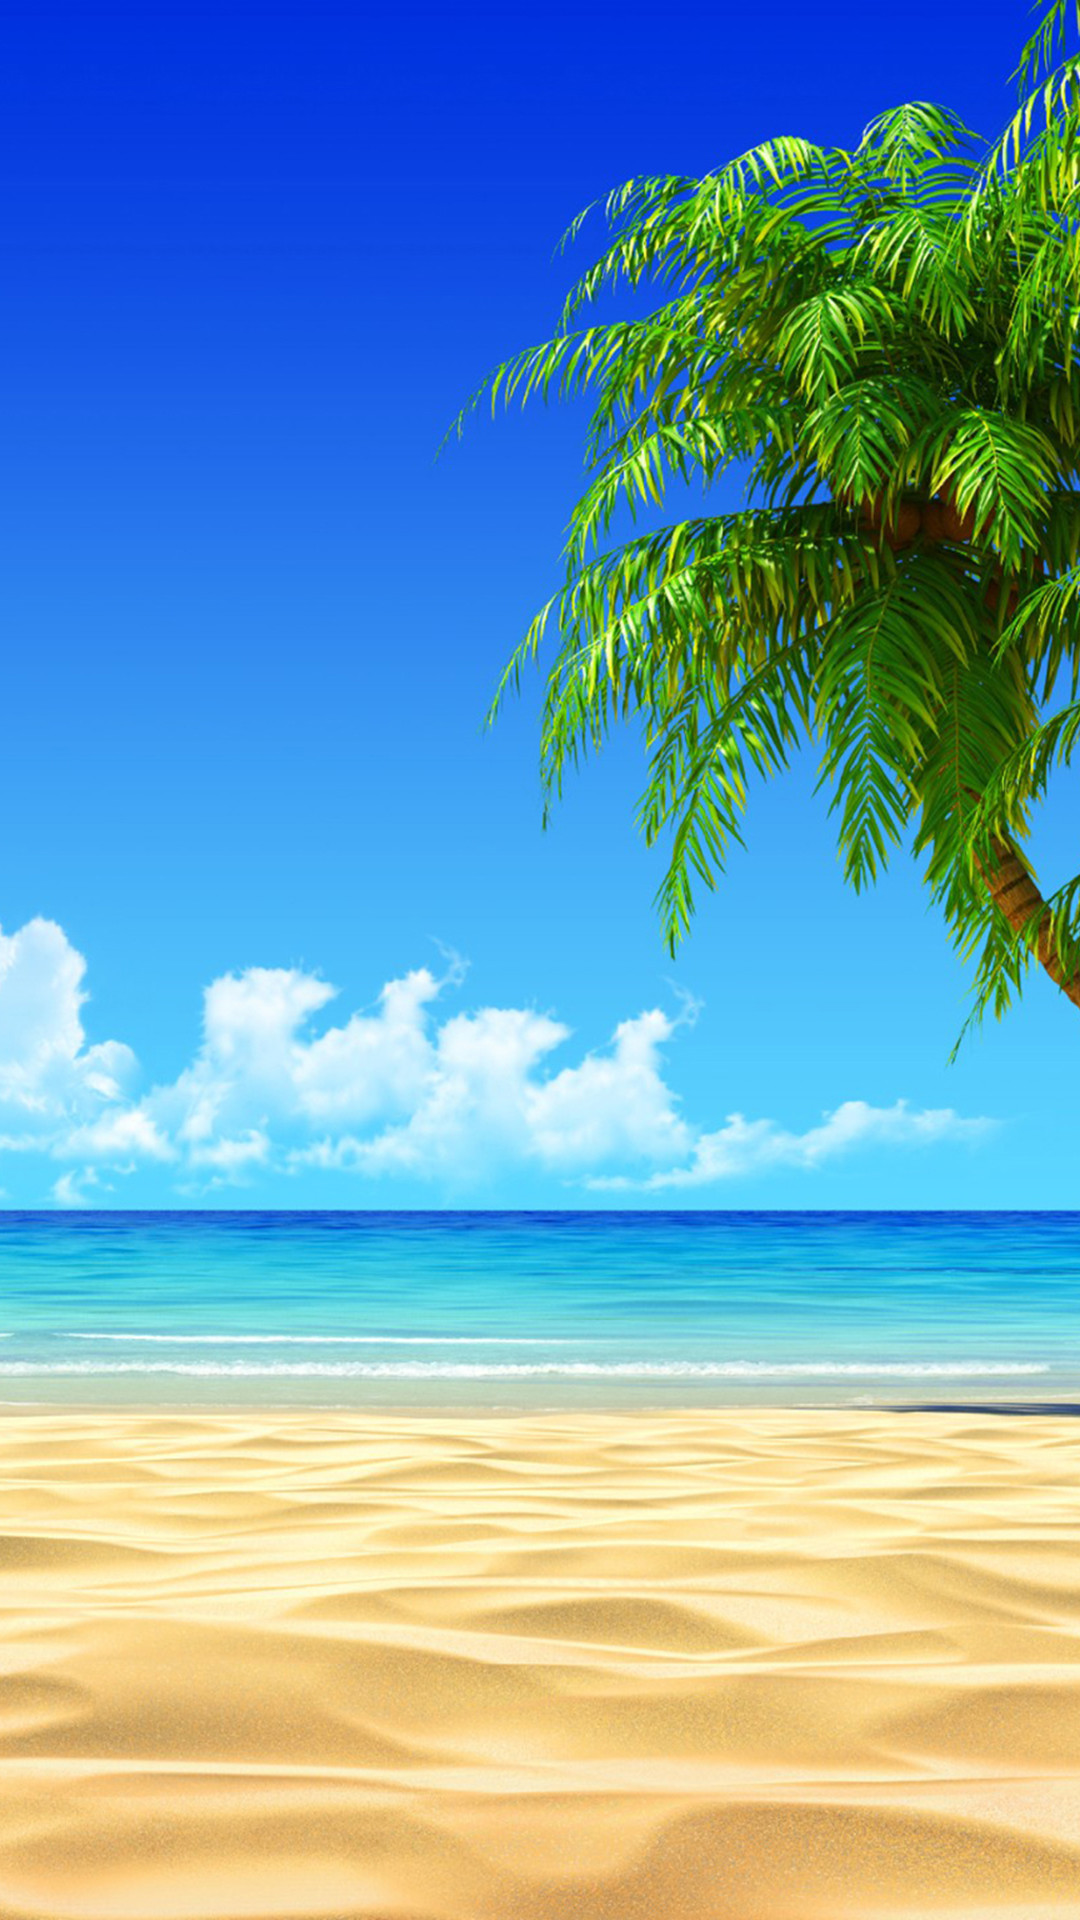 Summer Wallpaper, Beach Wallpaper, Cool Wallpaper, Nature Wallpaper, Barbados Beaches, Tropical Beaches, Sandy Beaches, Bora Bora Beach, Bahamas Beach